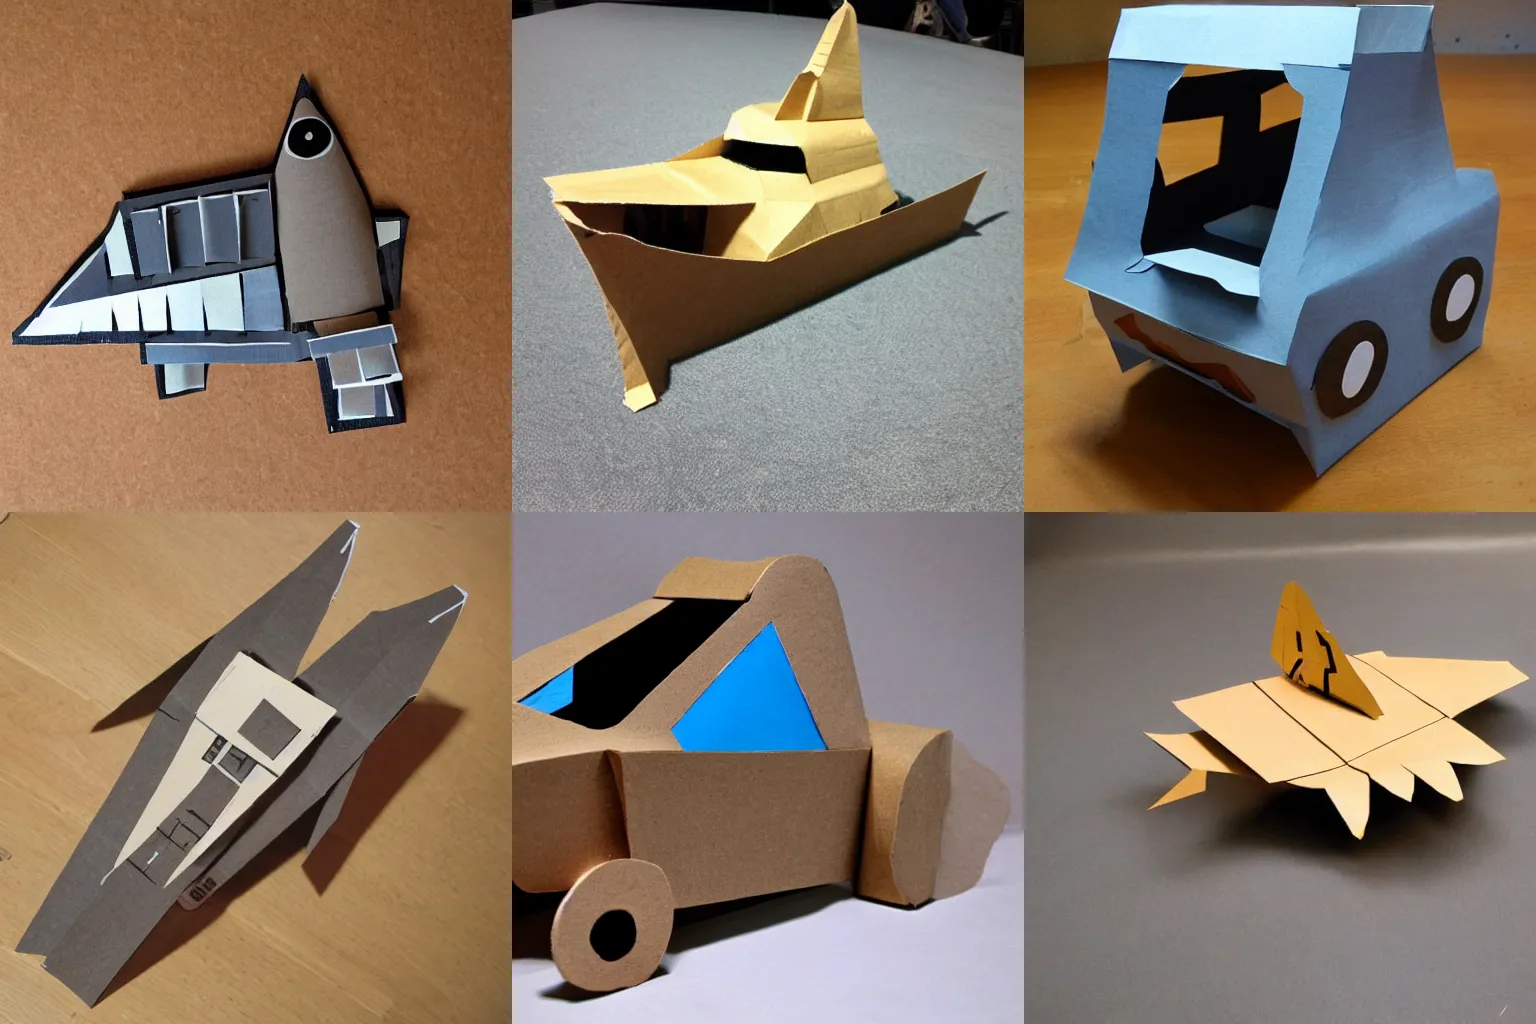 Prompt: spaceship made of cardboard